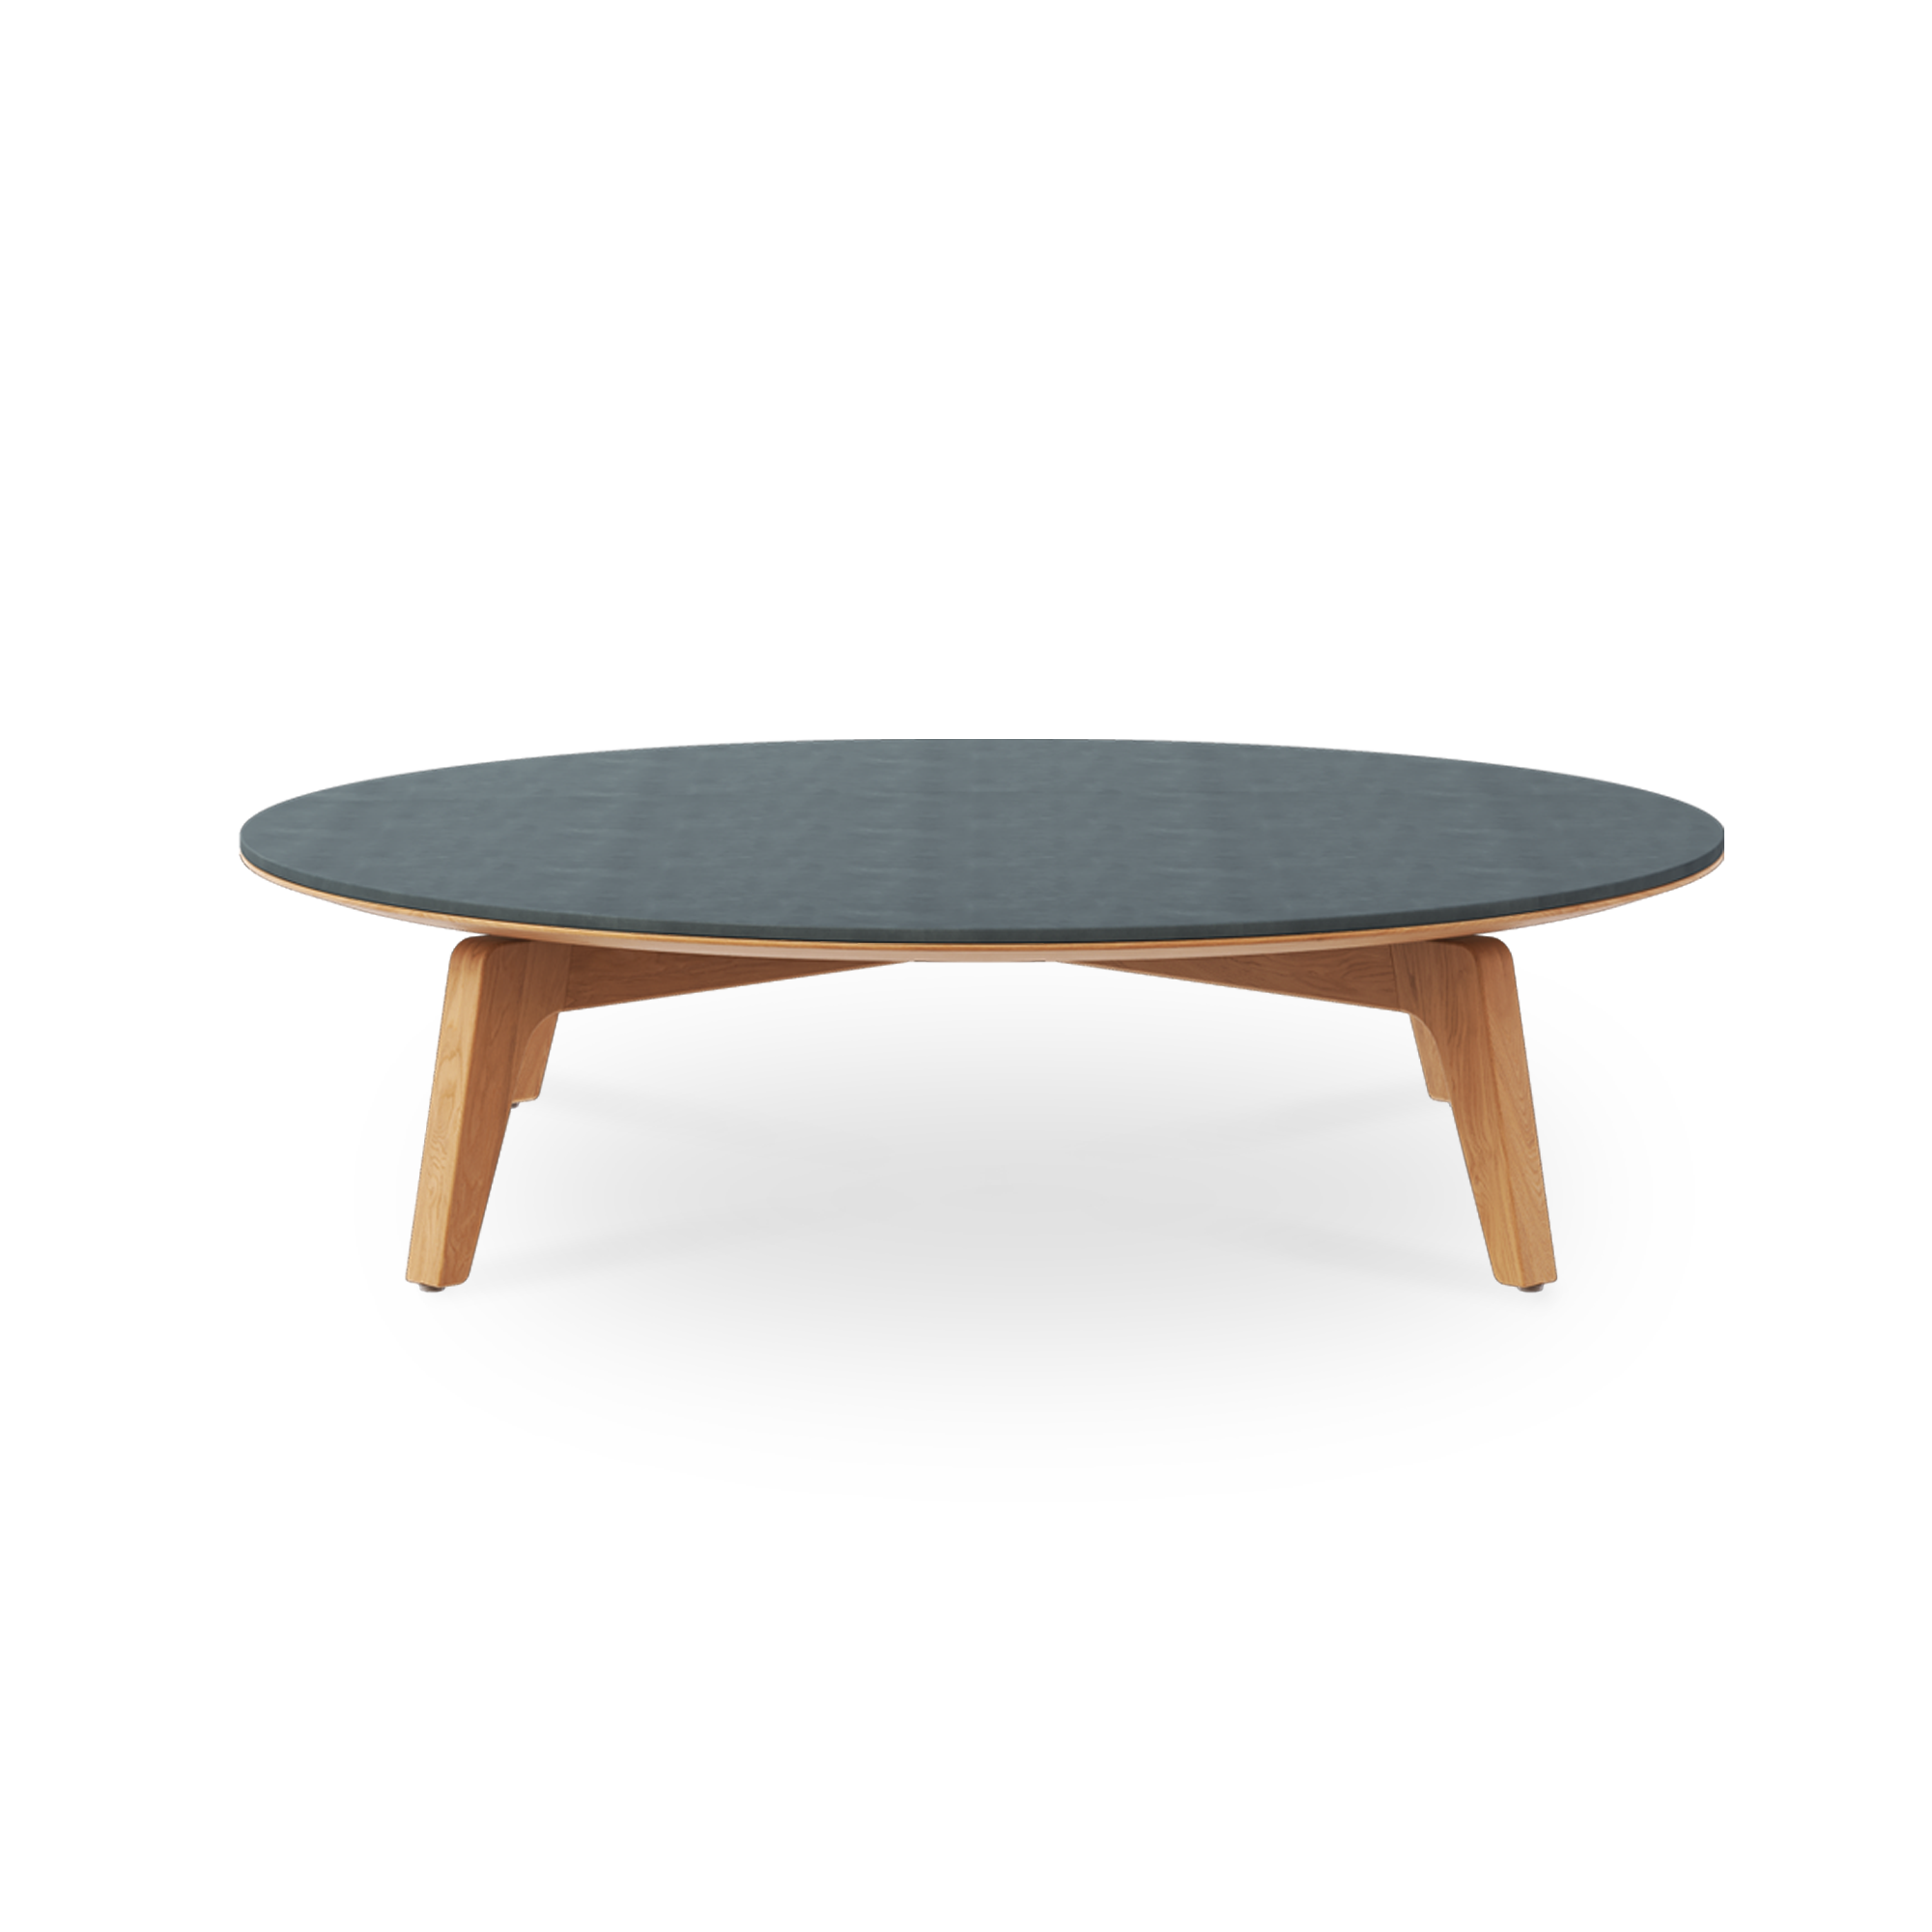 Platon Coffee Table Round Diameter 120 Ceramic Front Uc